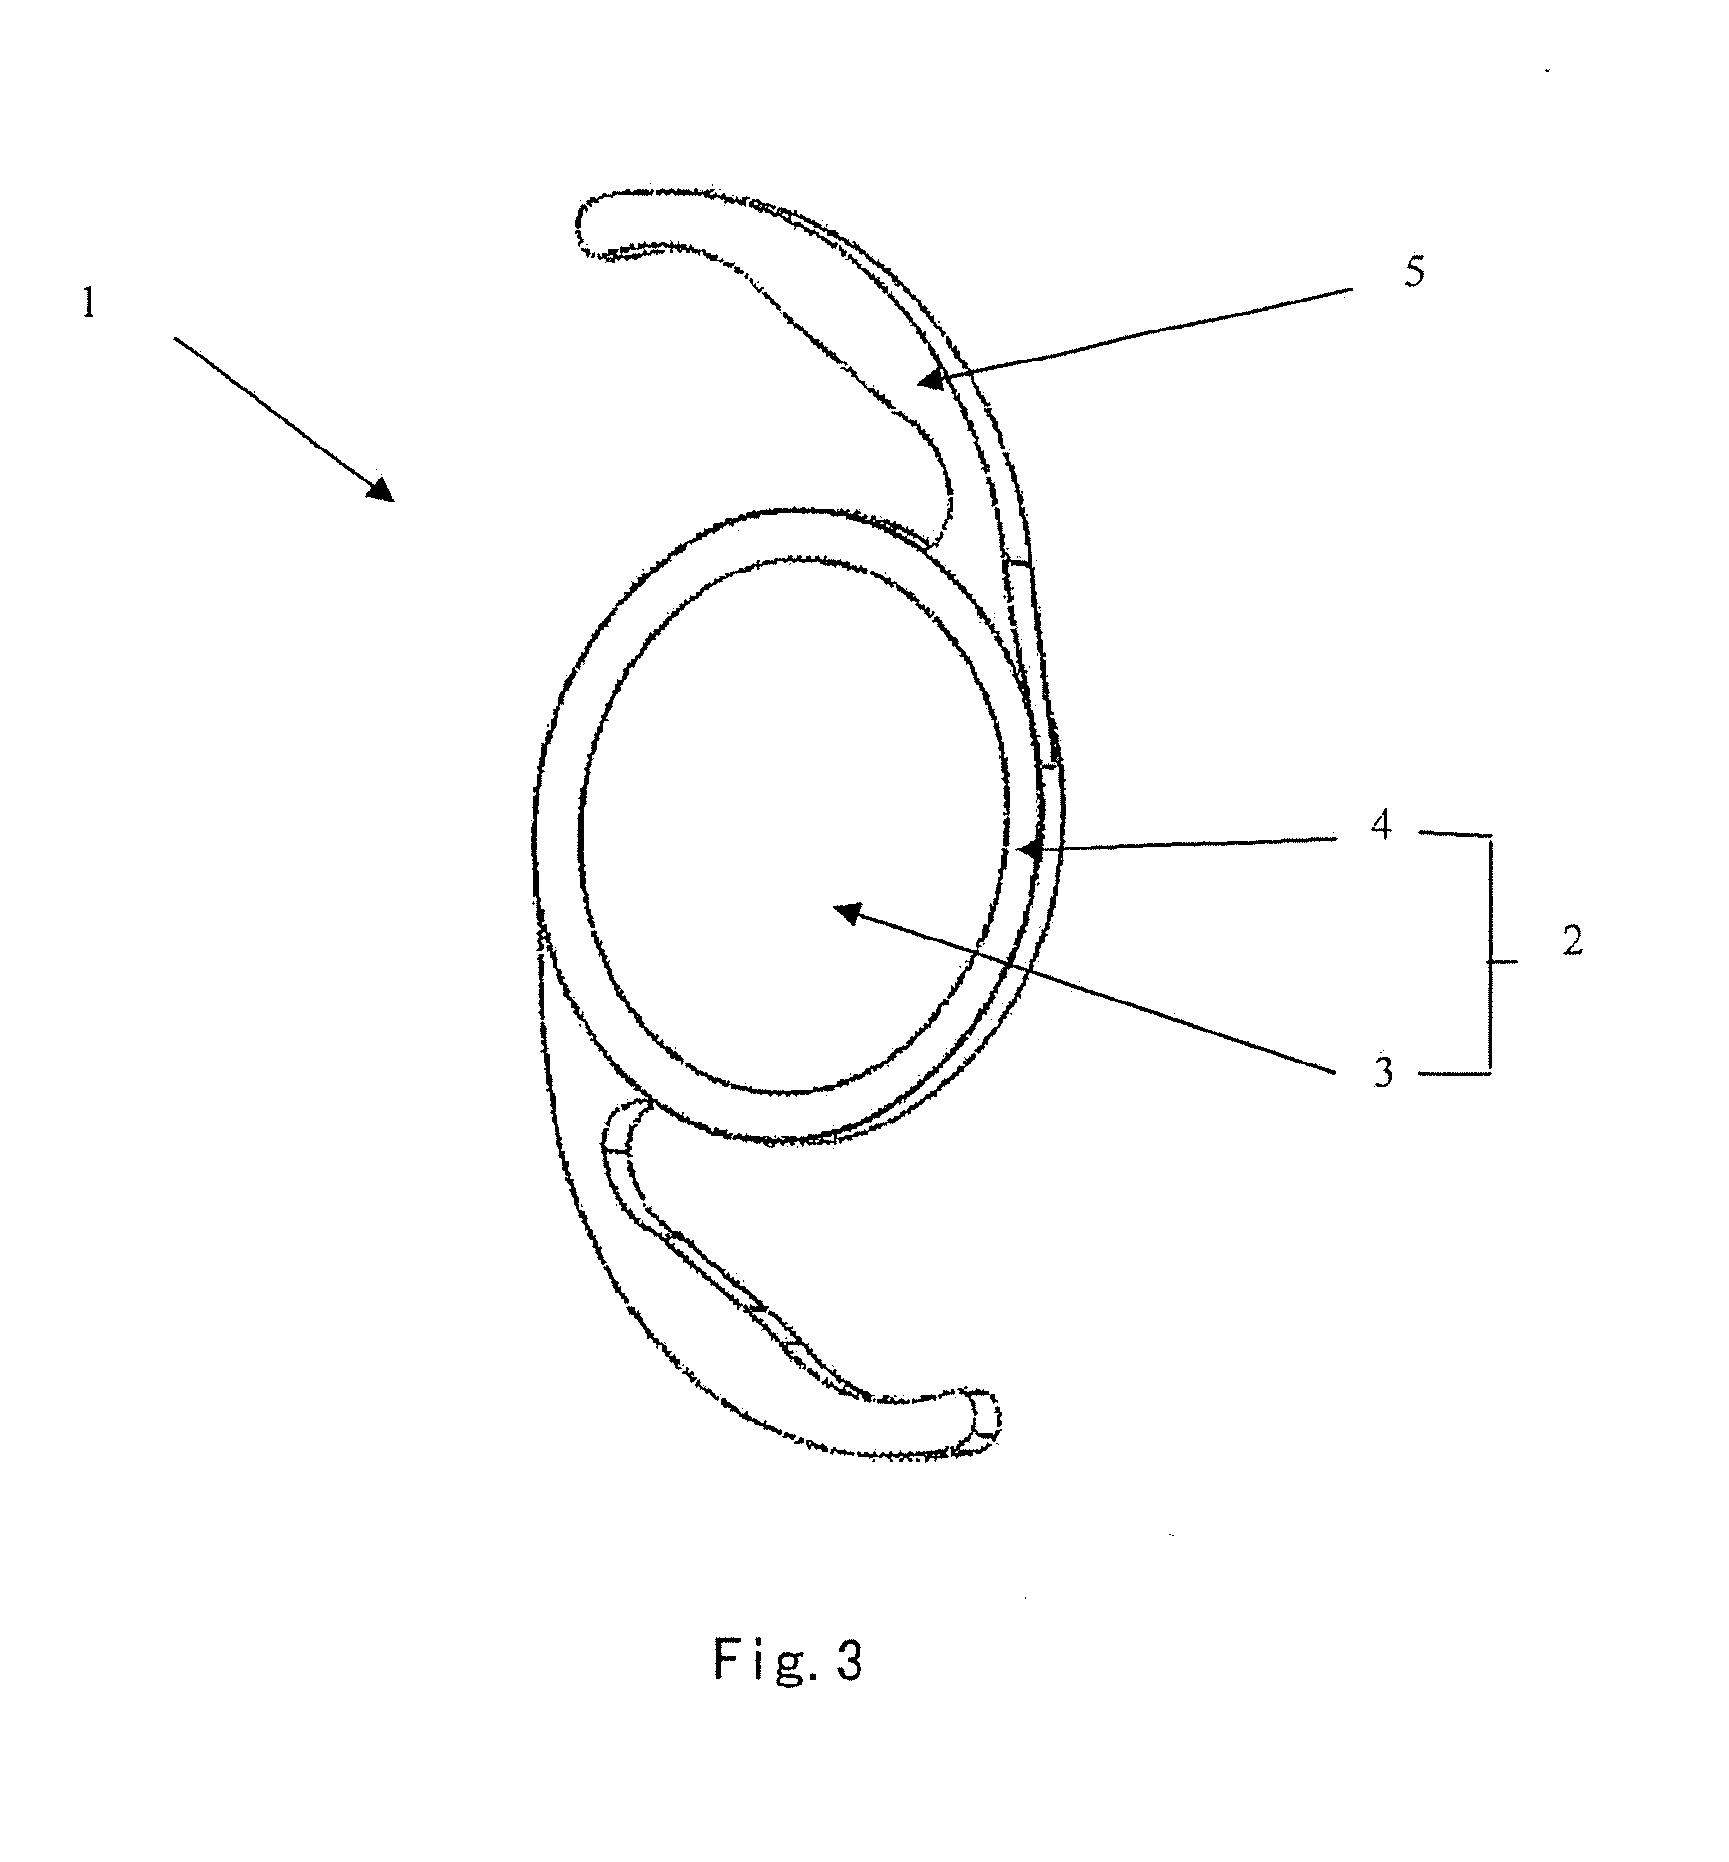 Posterior chamber intraocular lens